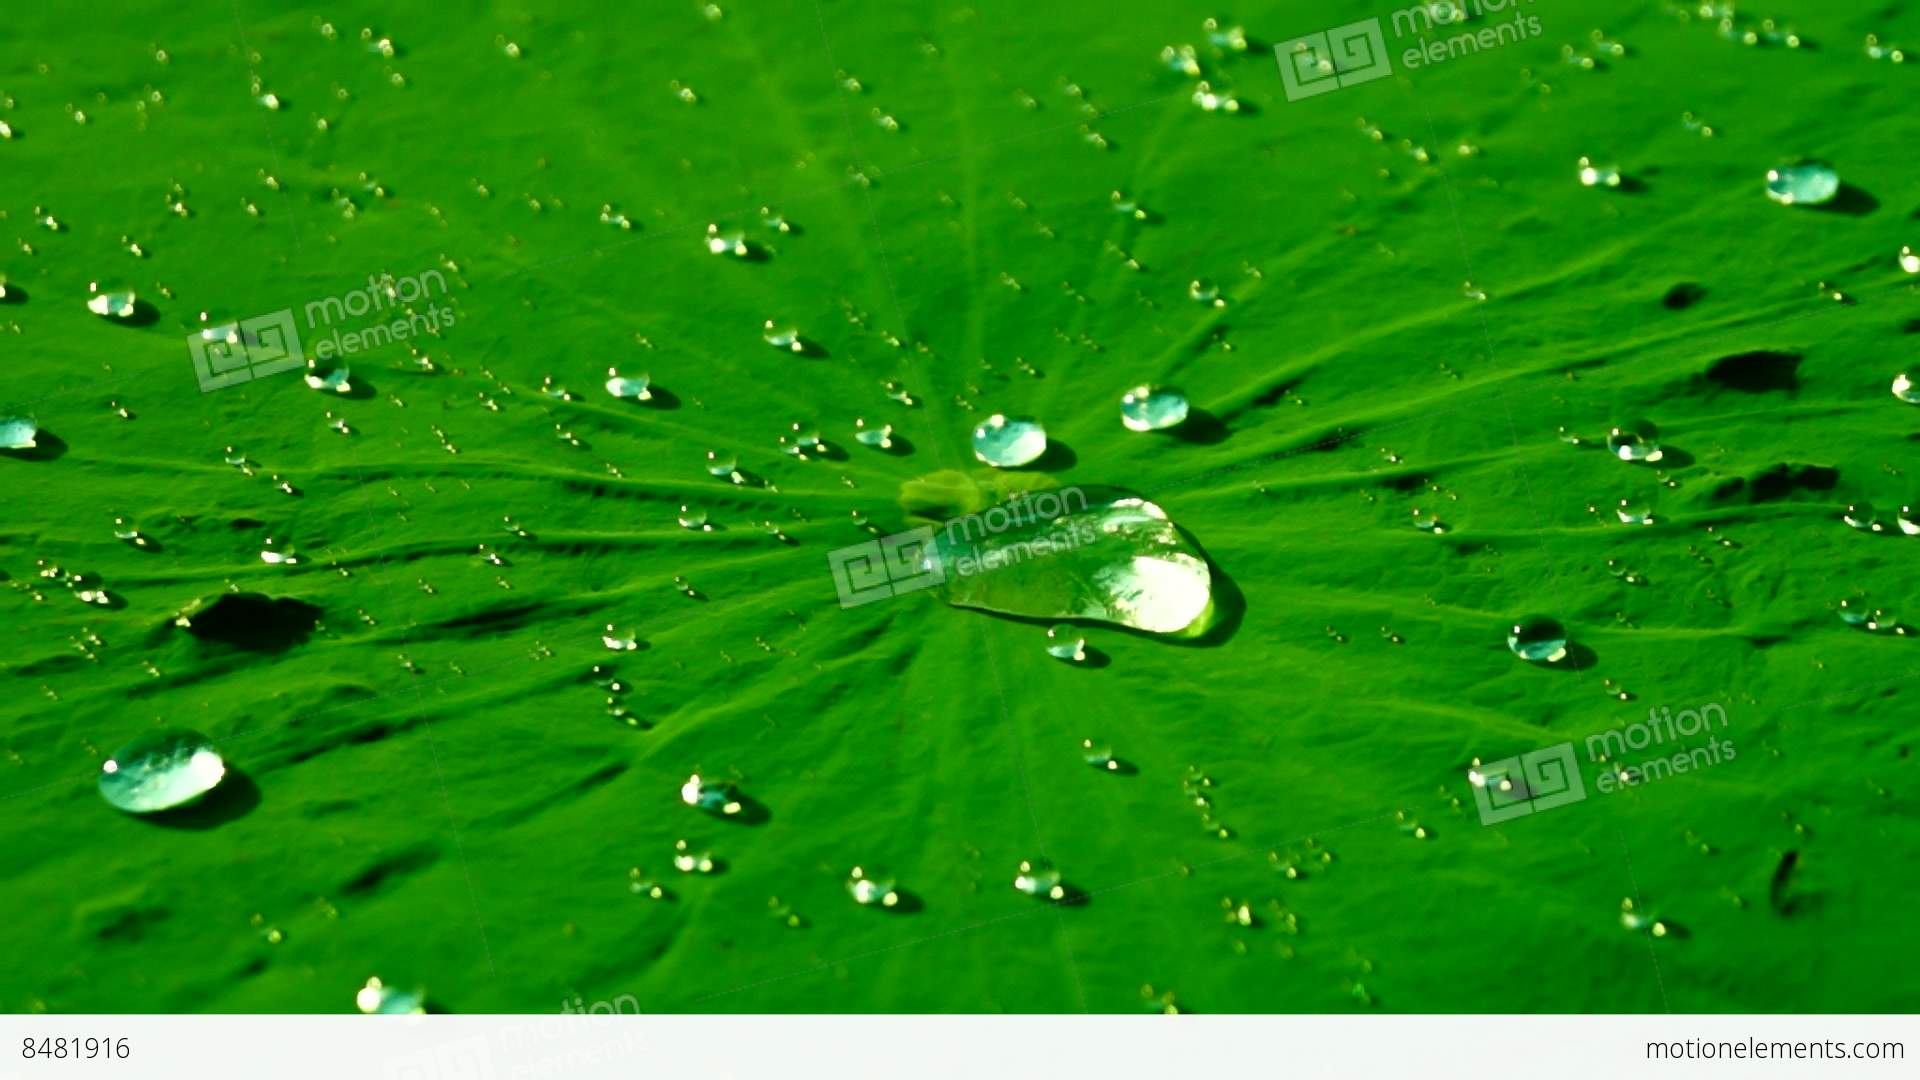 Glowing Water Drops On The Lotus Leaf (Nelumbo Nucifera). Lotus ...